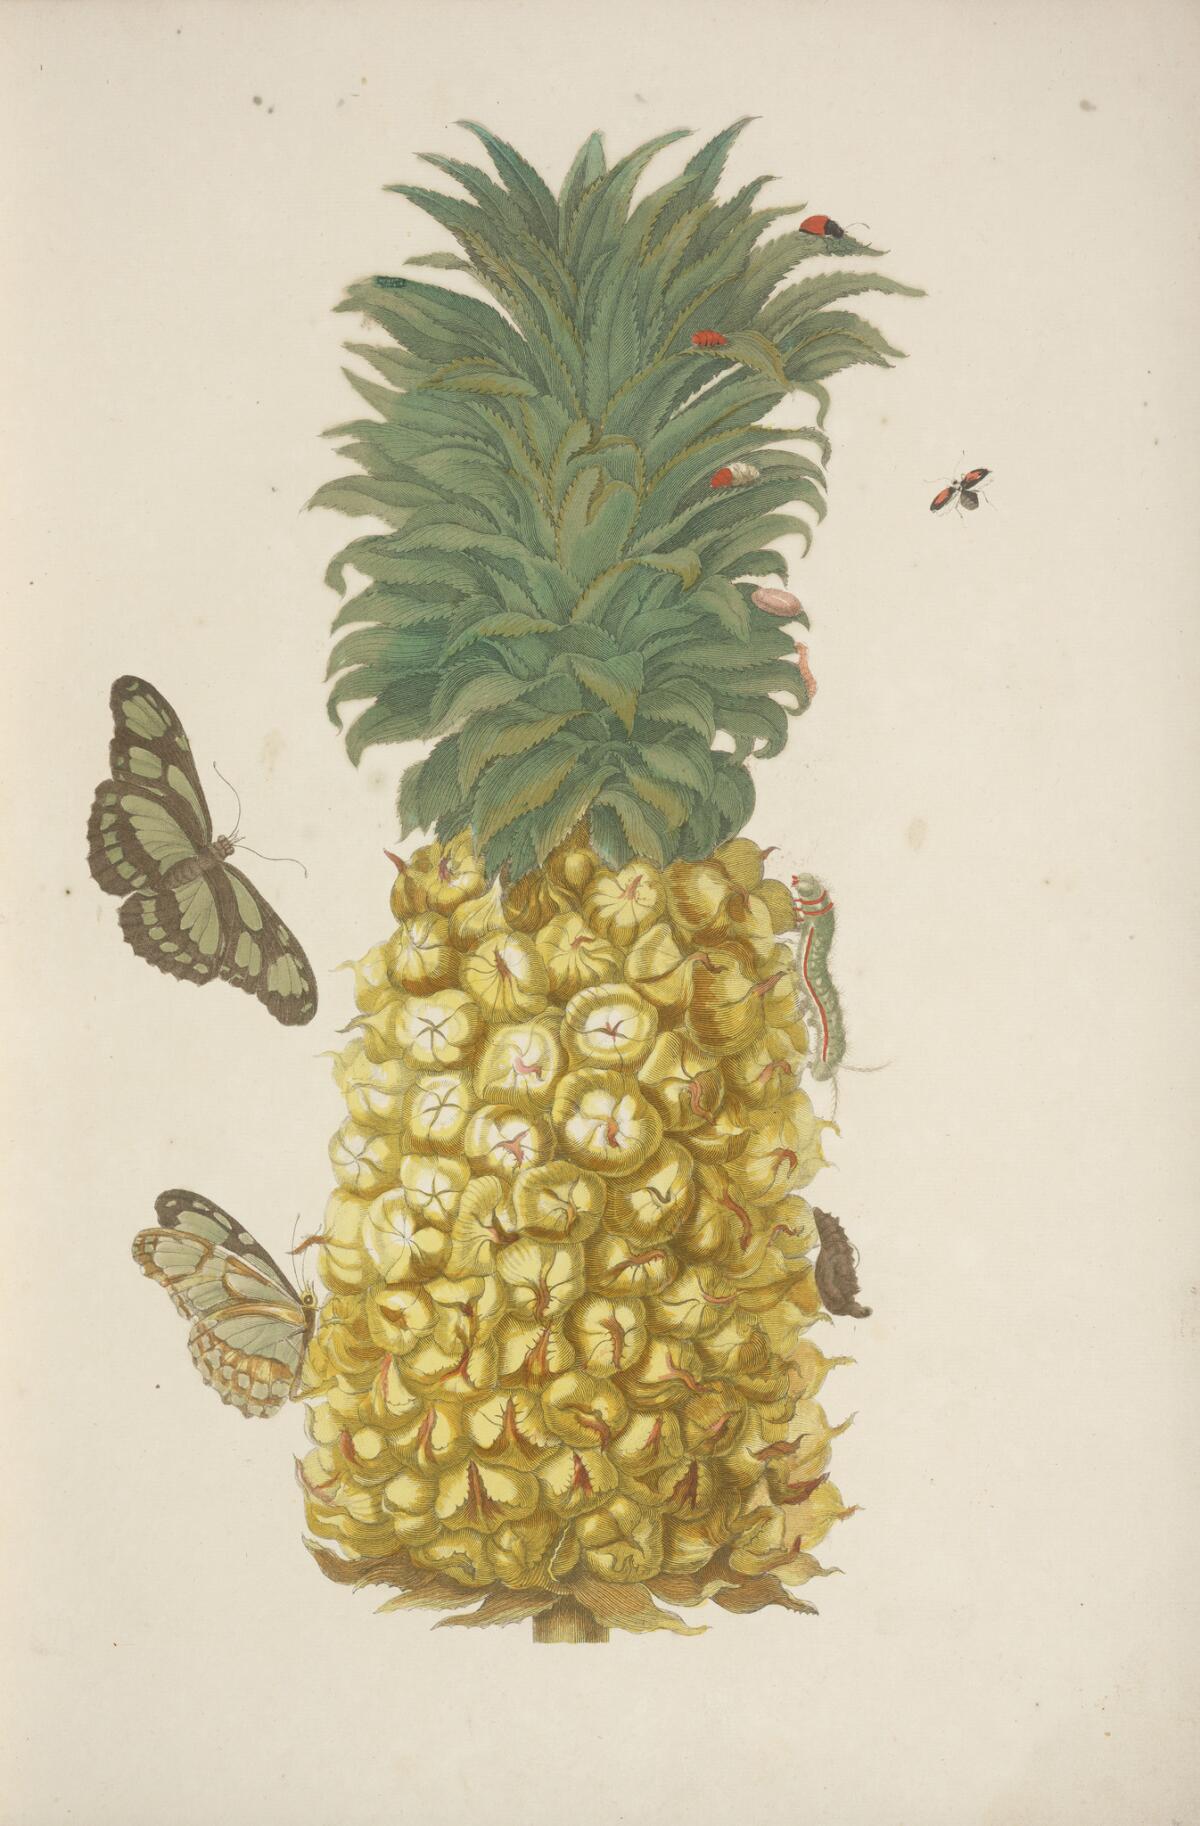 A pineapple as depicted in Maria Sibylla Merian's "Metamorphosis insectorum Surinamensium," 1705.